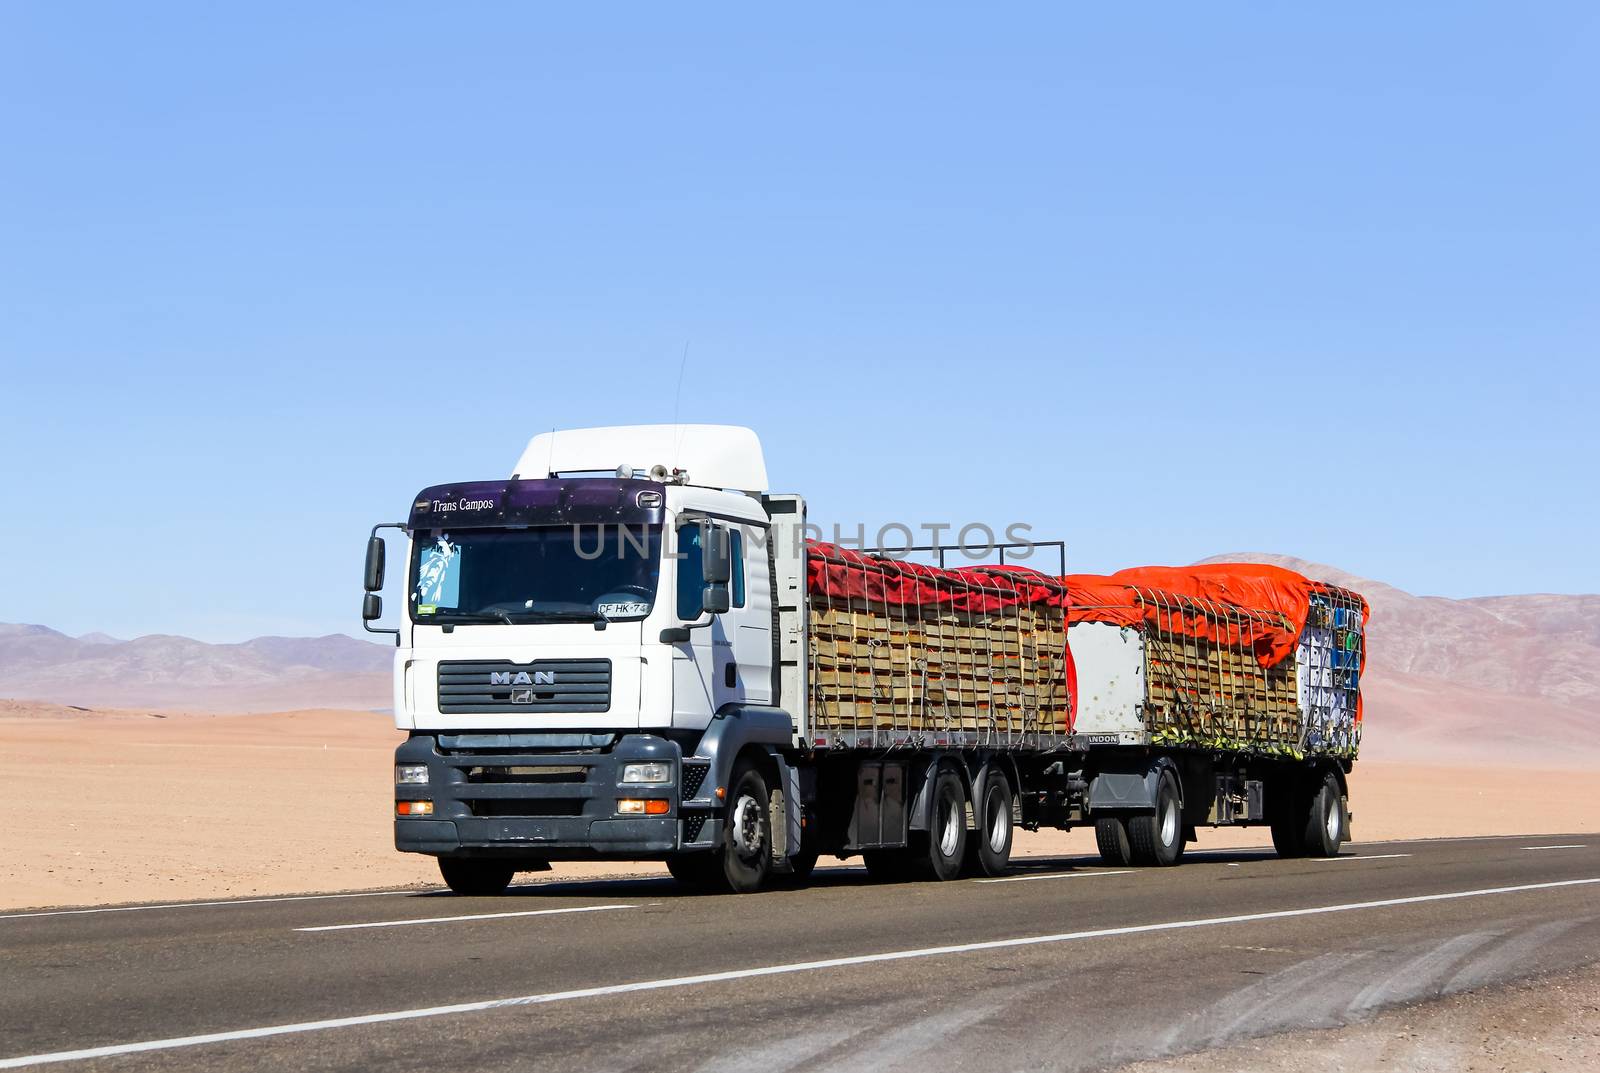 ATACAMA, CHILE - NOVEMBER 14, 2015: Modern truck MAN TGA at the interurban freeway through the Atacama desert.